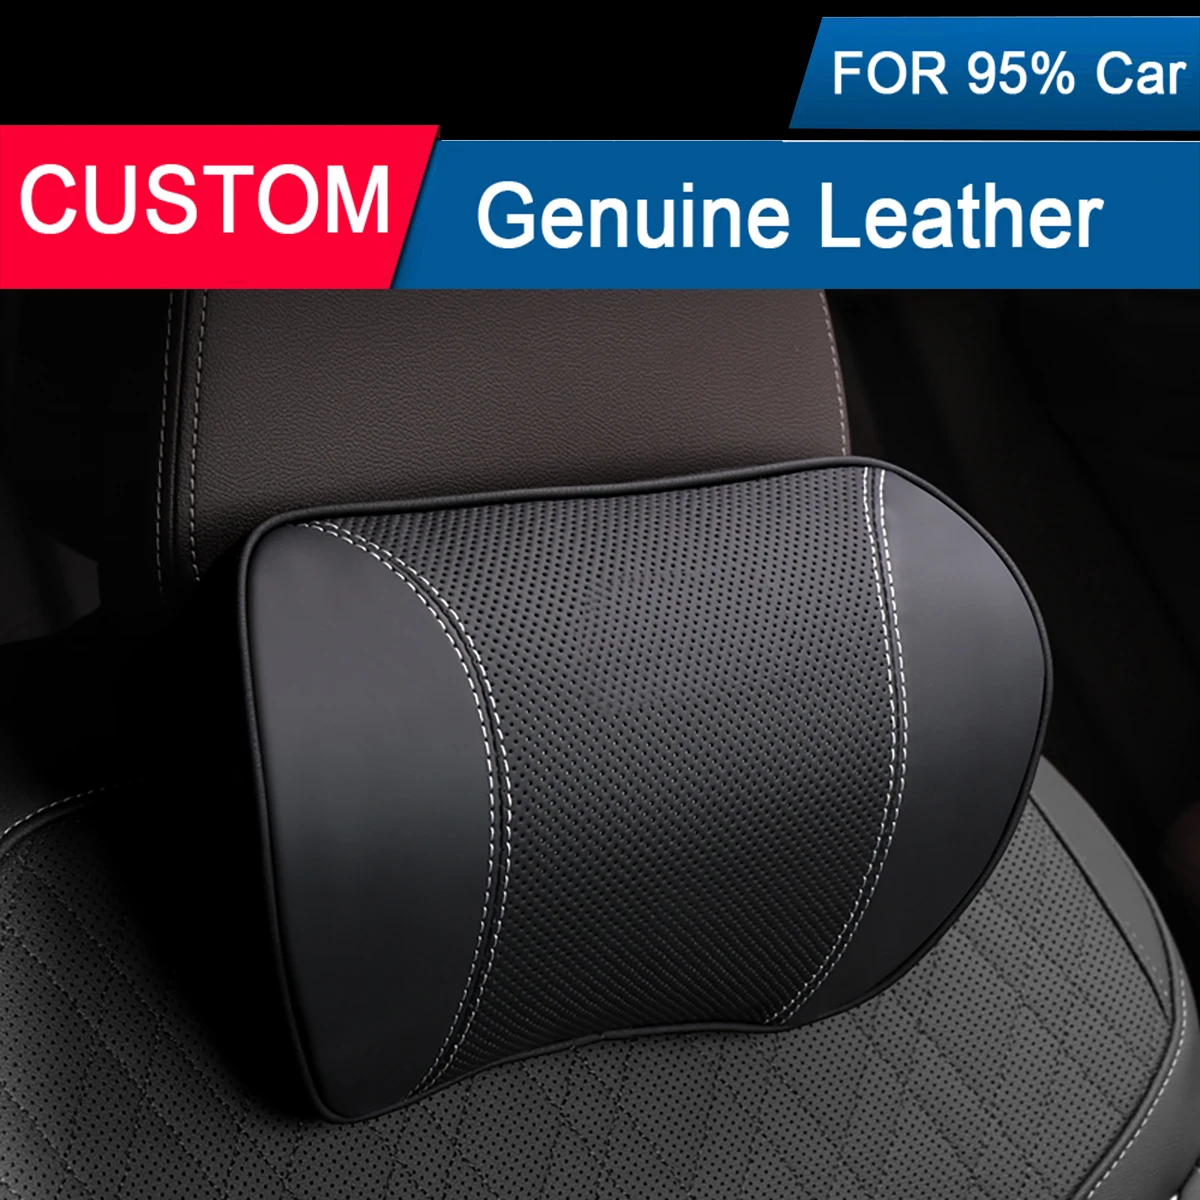 Leather Car Neck Pillow For Audi Mercedes Tesla Toyota Land Rover Ford Honda Lexus Hyundai Etc. Memory Foam Car Seat Headrest